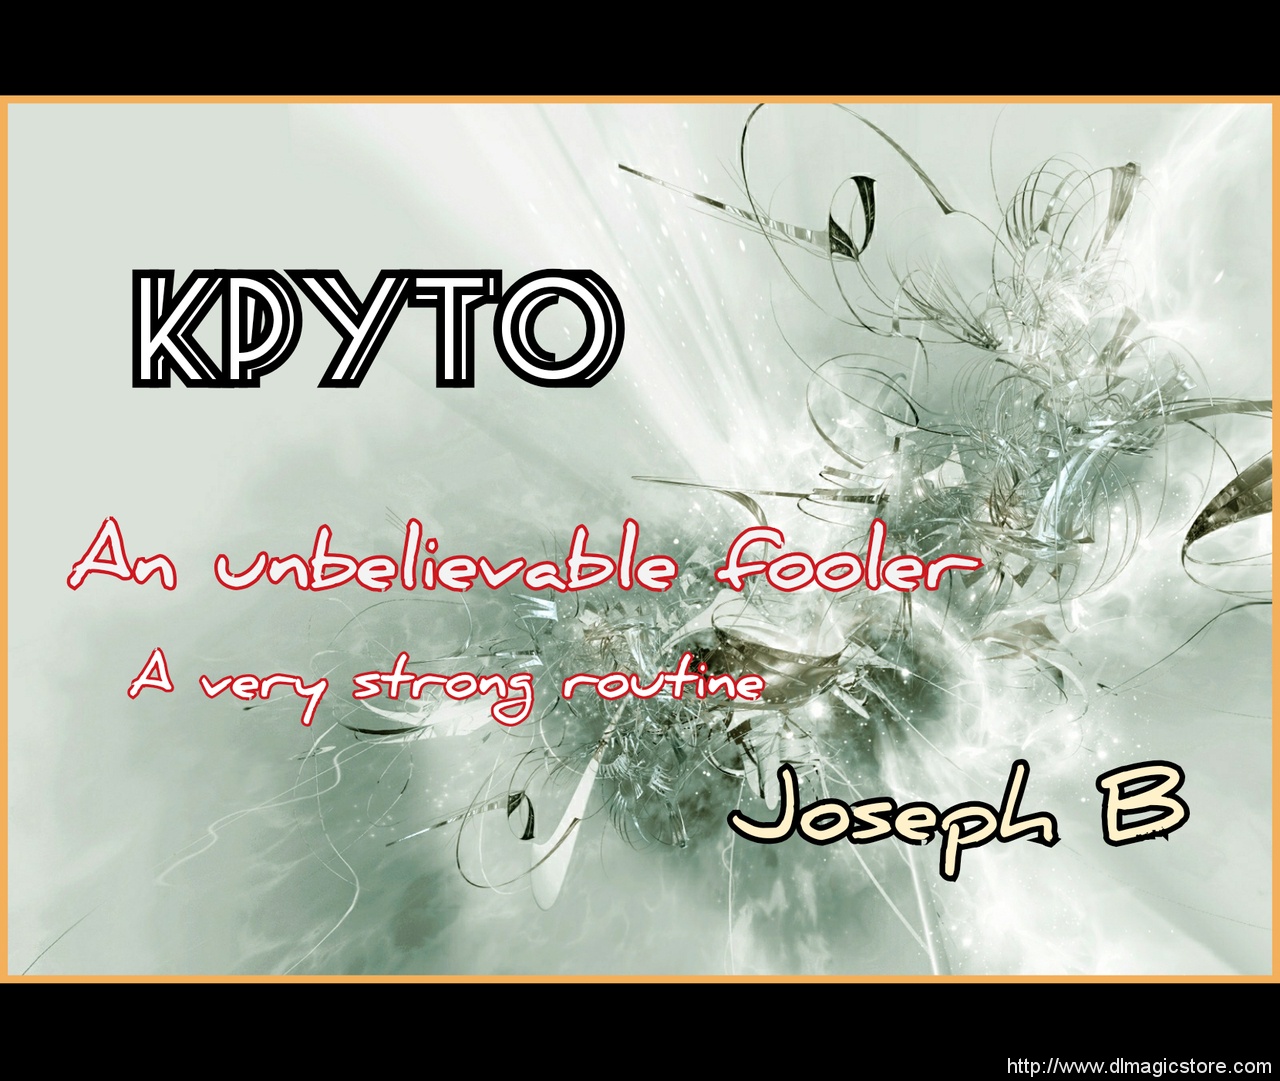 KPYTO by Joseph B. (Instant Download)